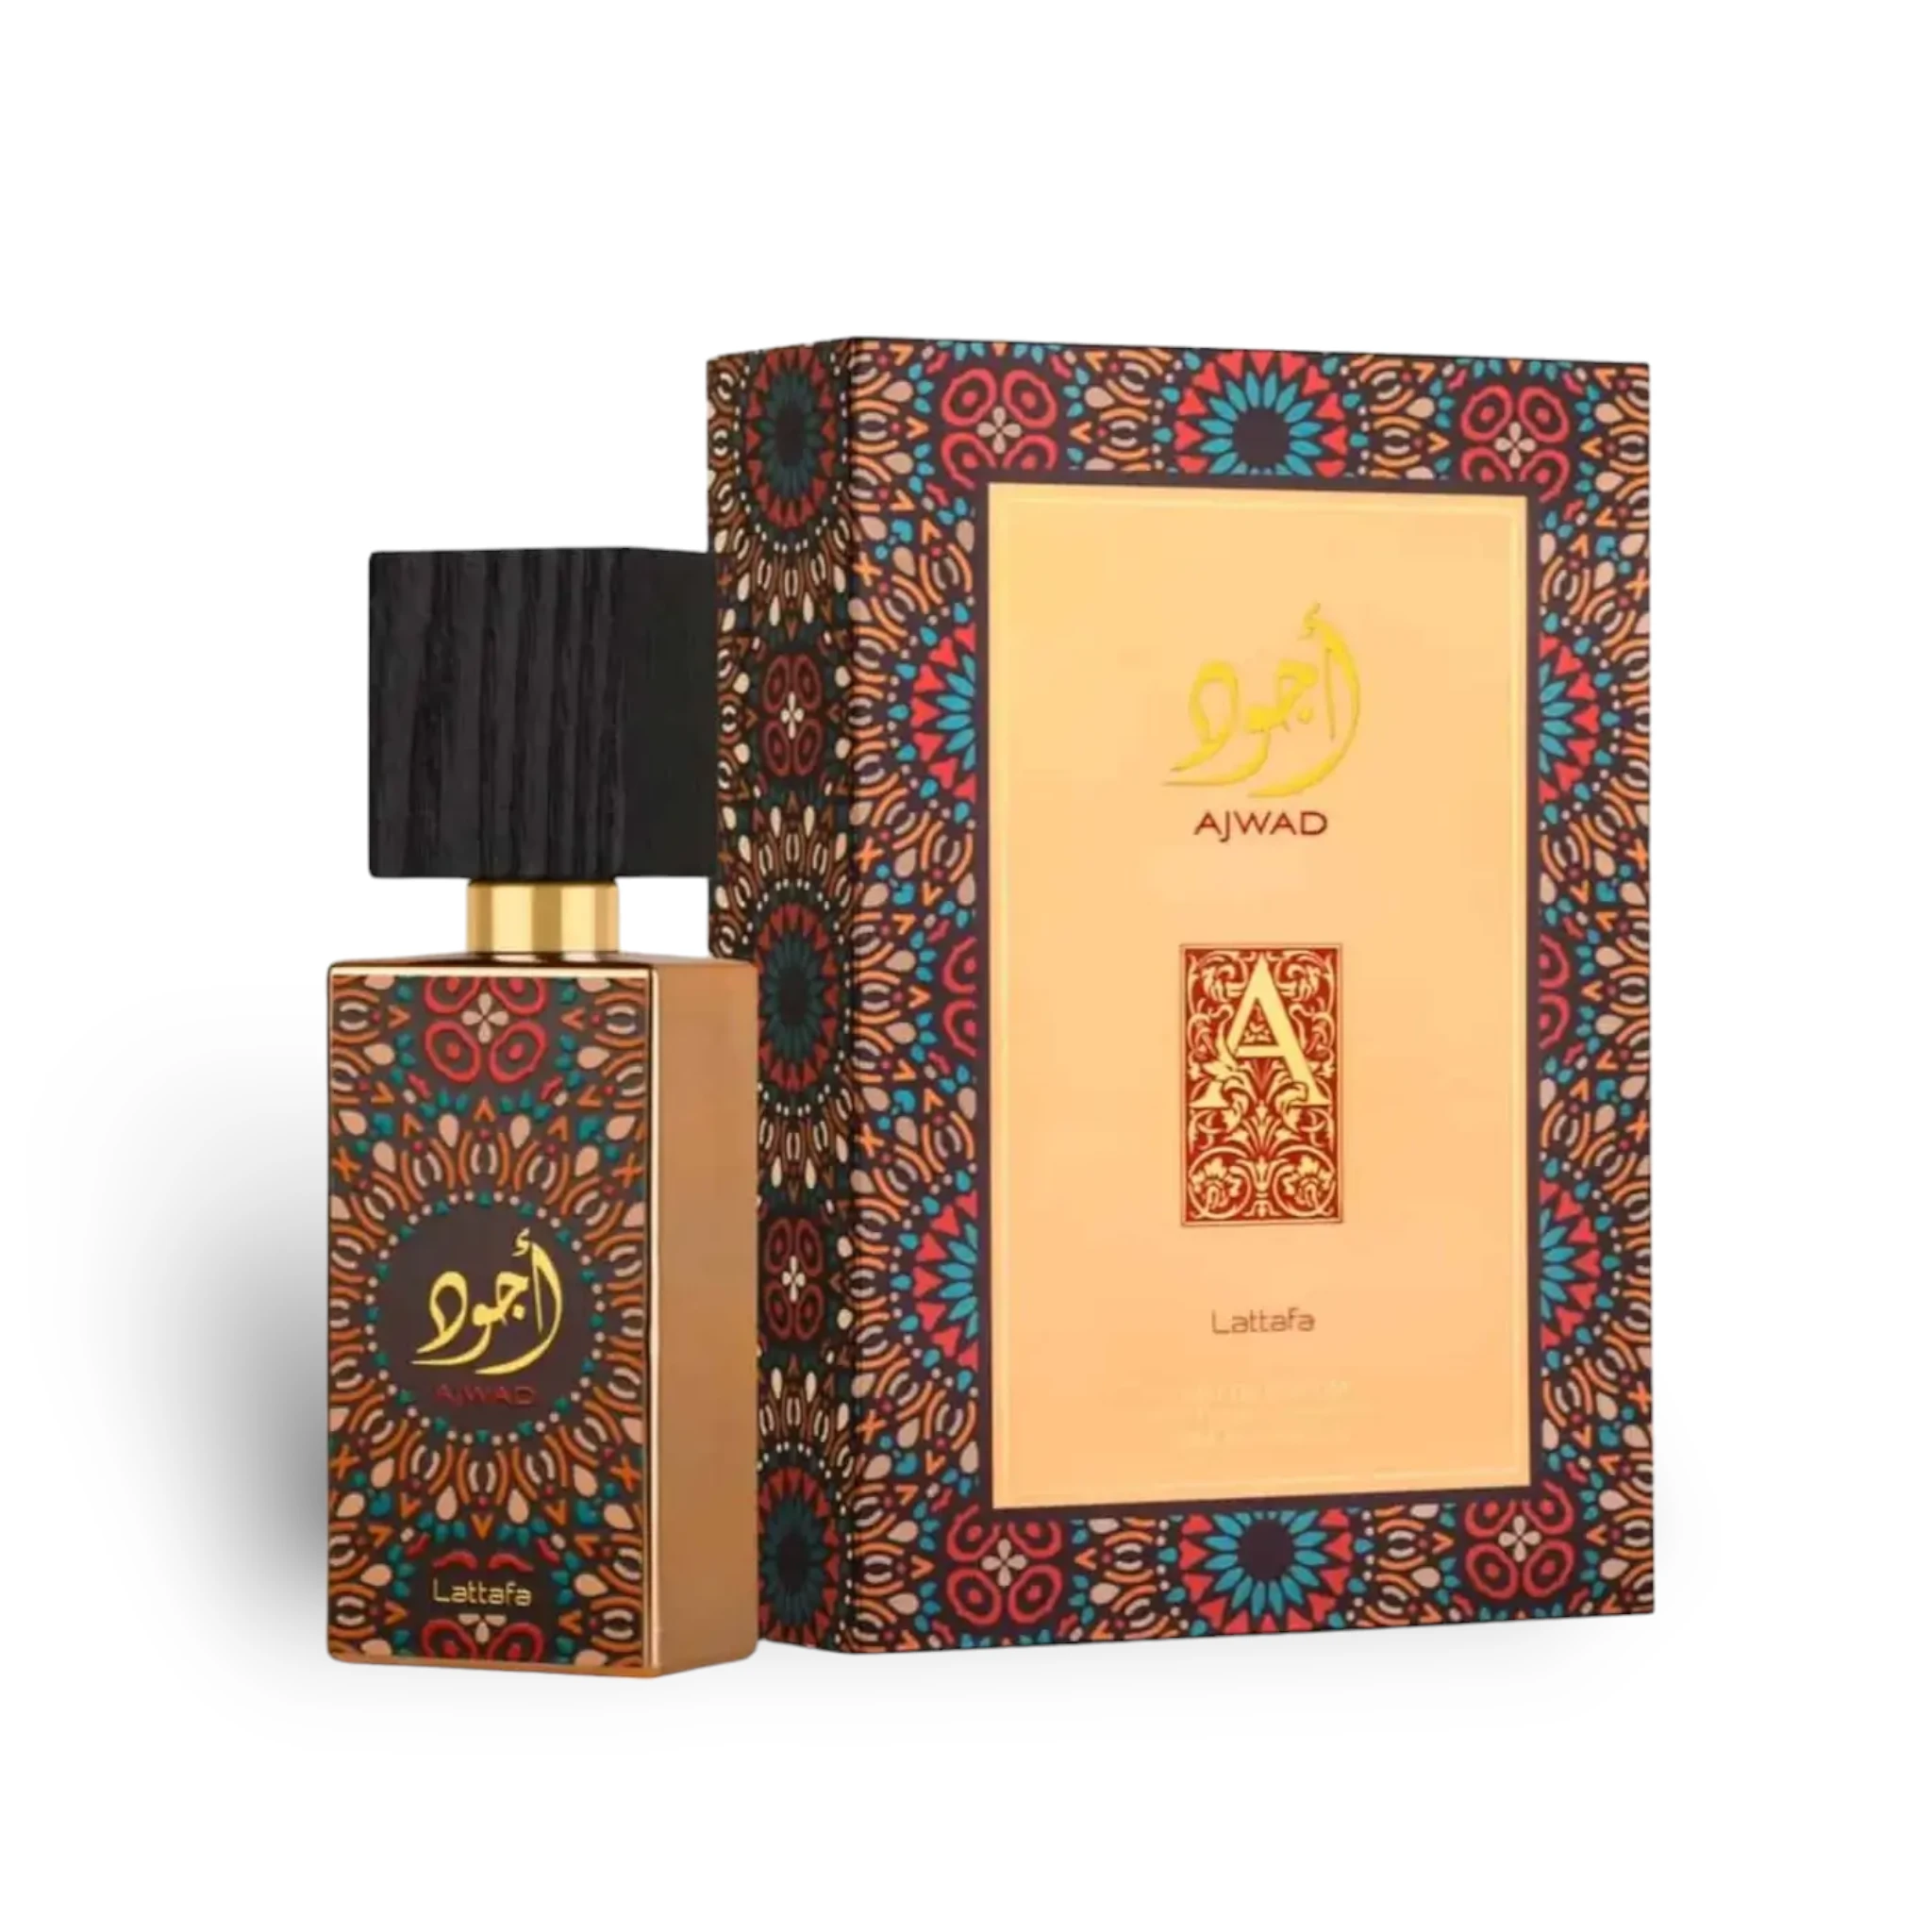 Ajwad Perfume Eau De Parfum 60Ml By Lattafa